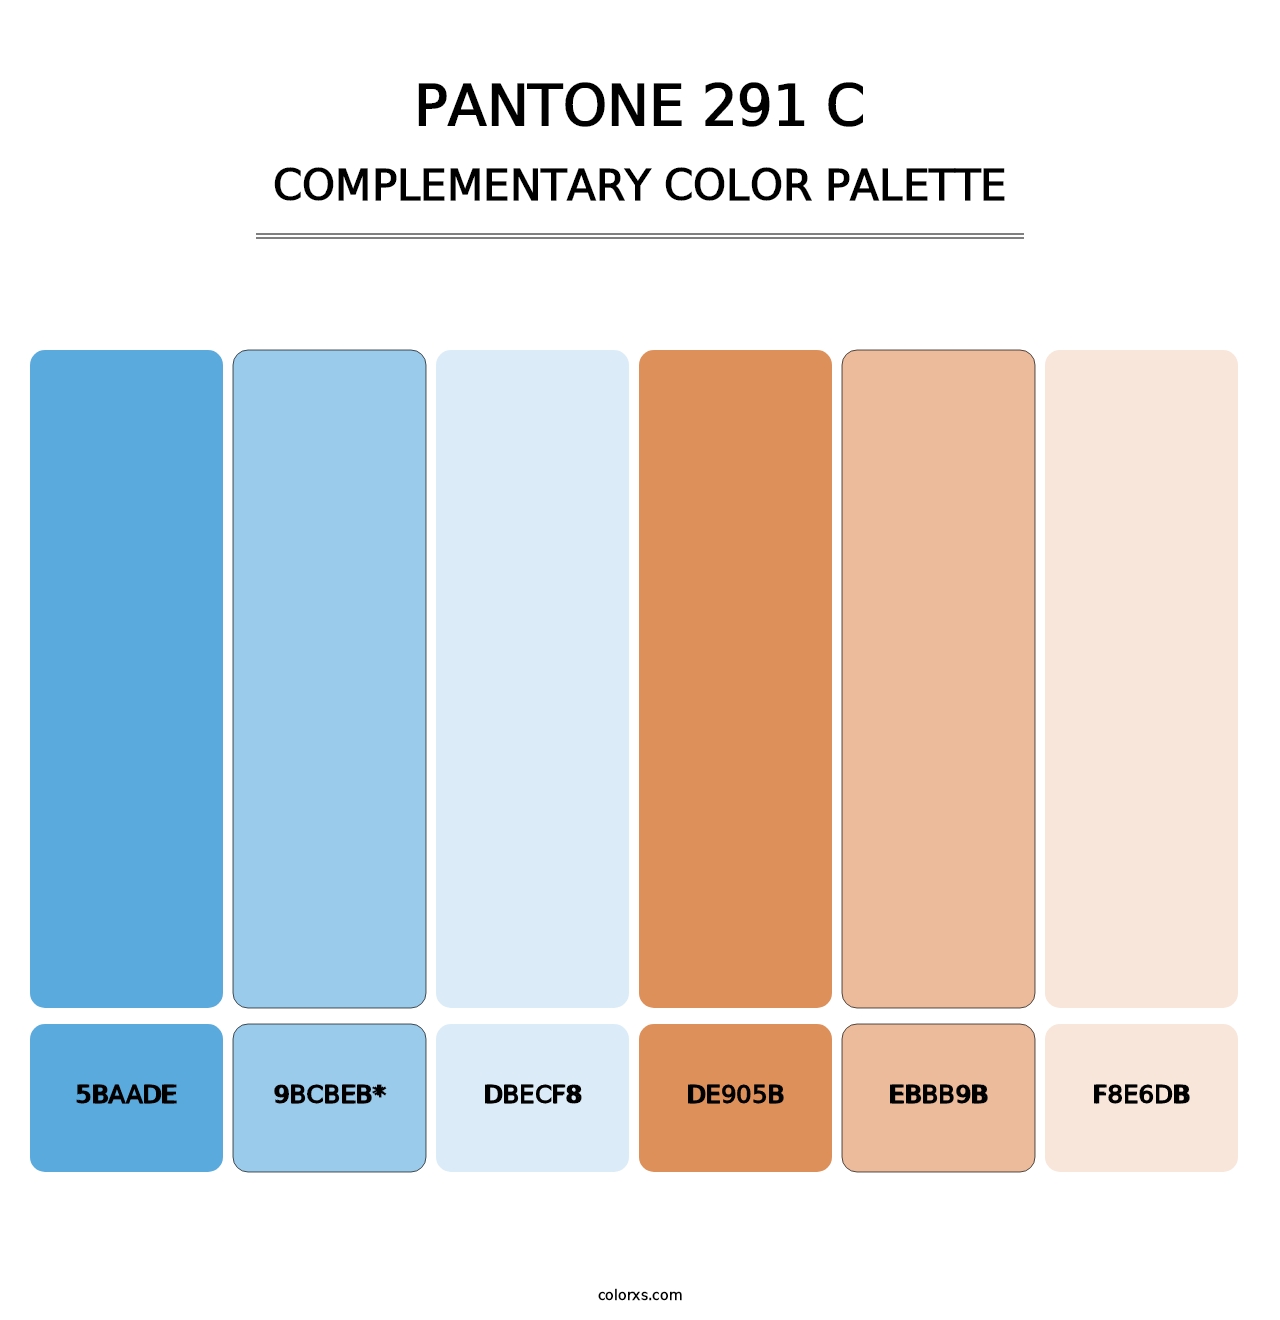 PANTONE 291 C - Complementary Color Palette